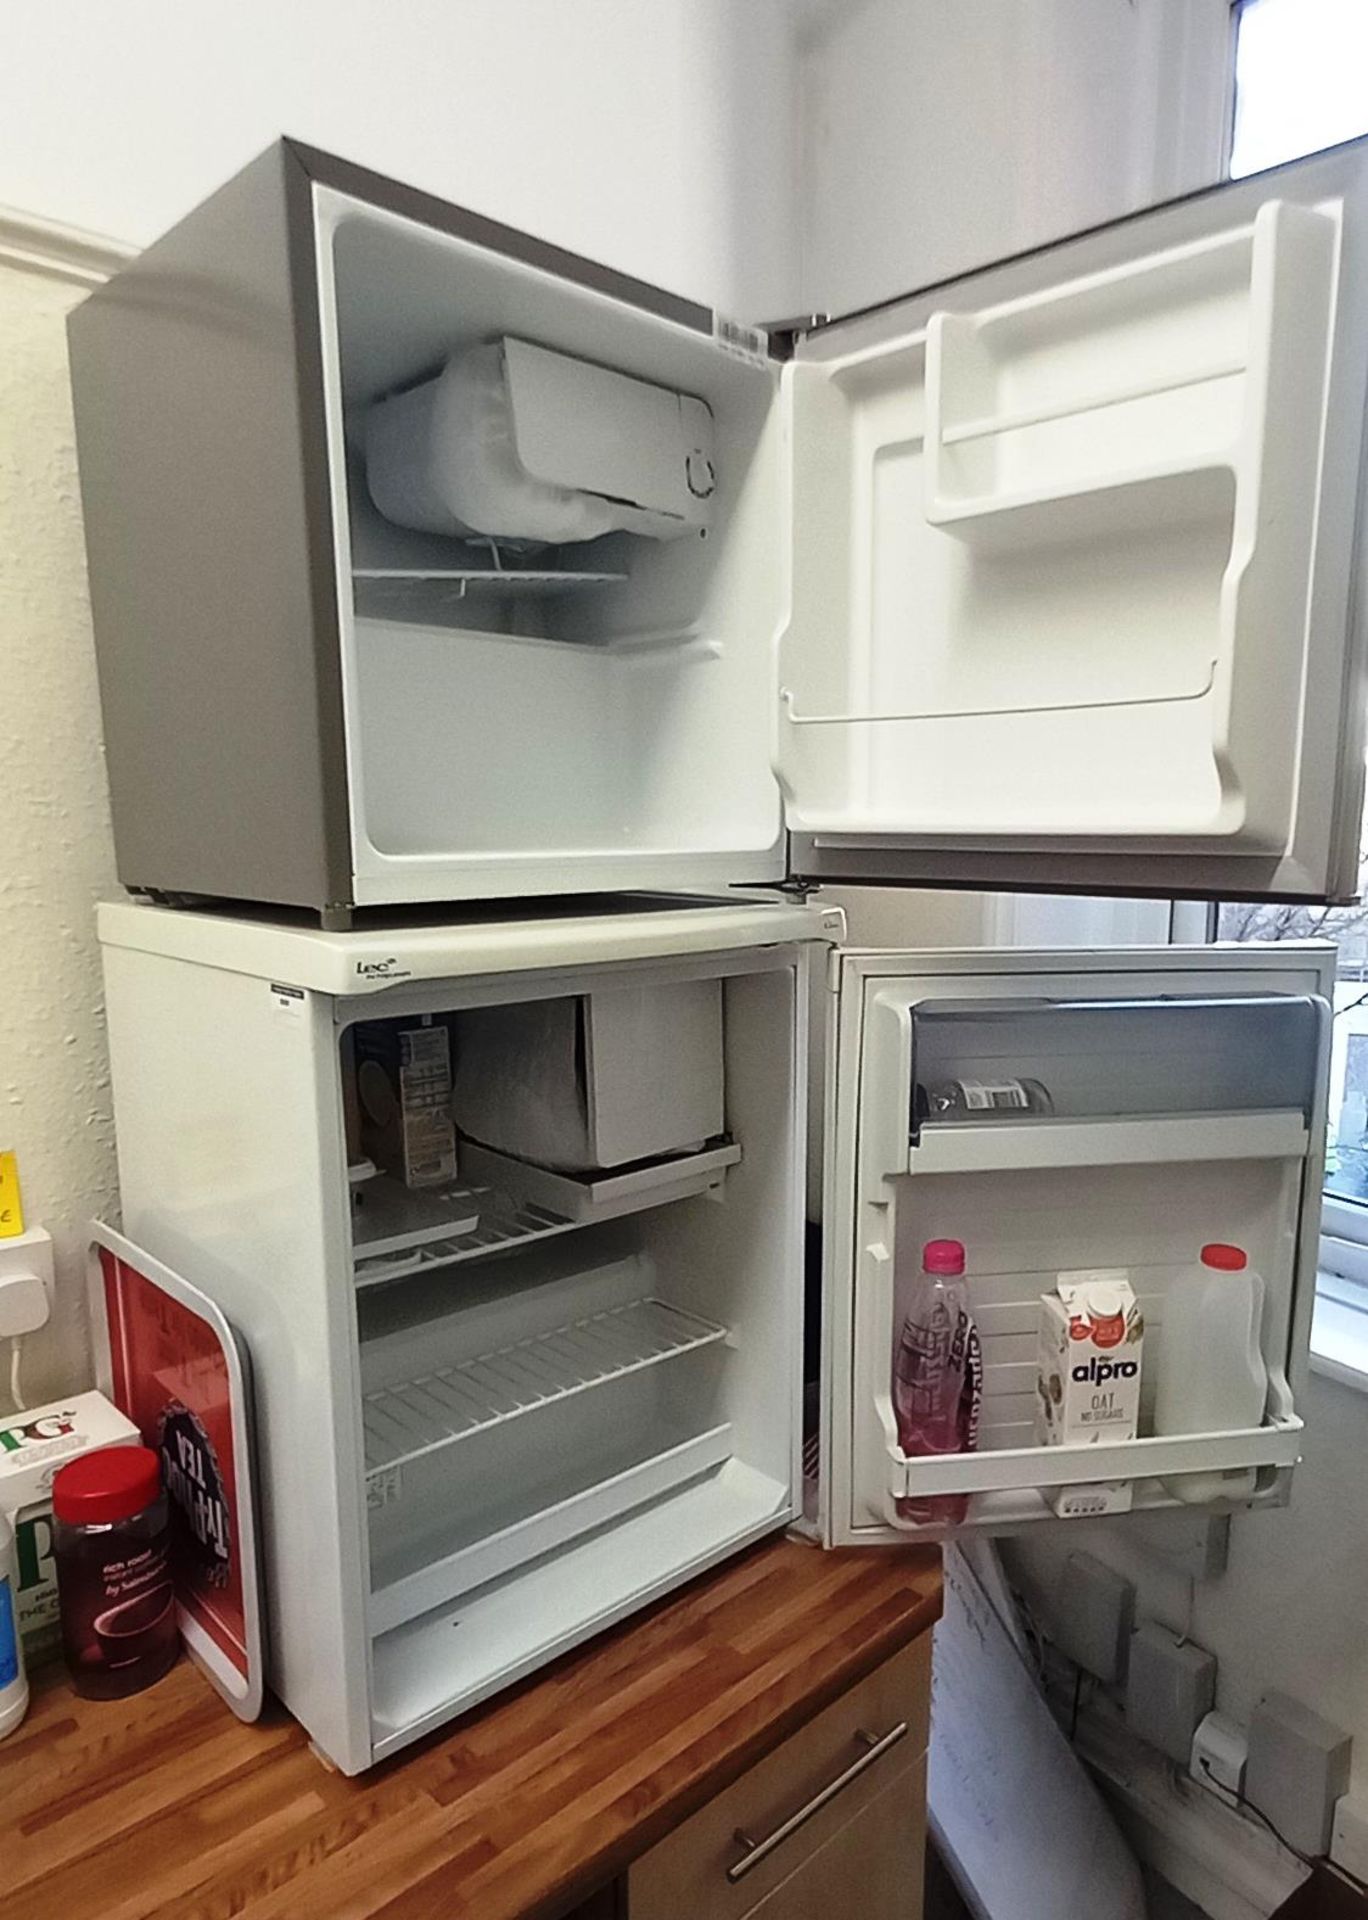 LEC countertop Fridge freezer and Russel Hobbs countertop fridge freezer - Image 2 of 2